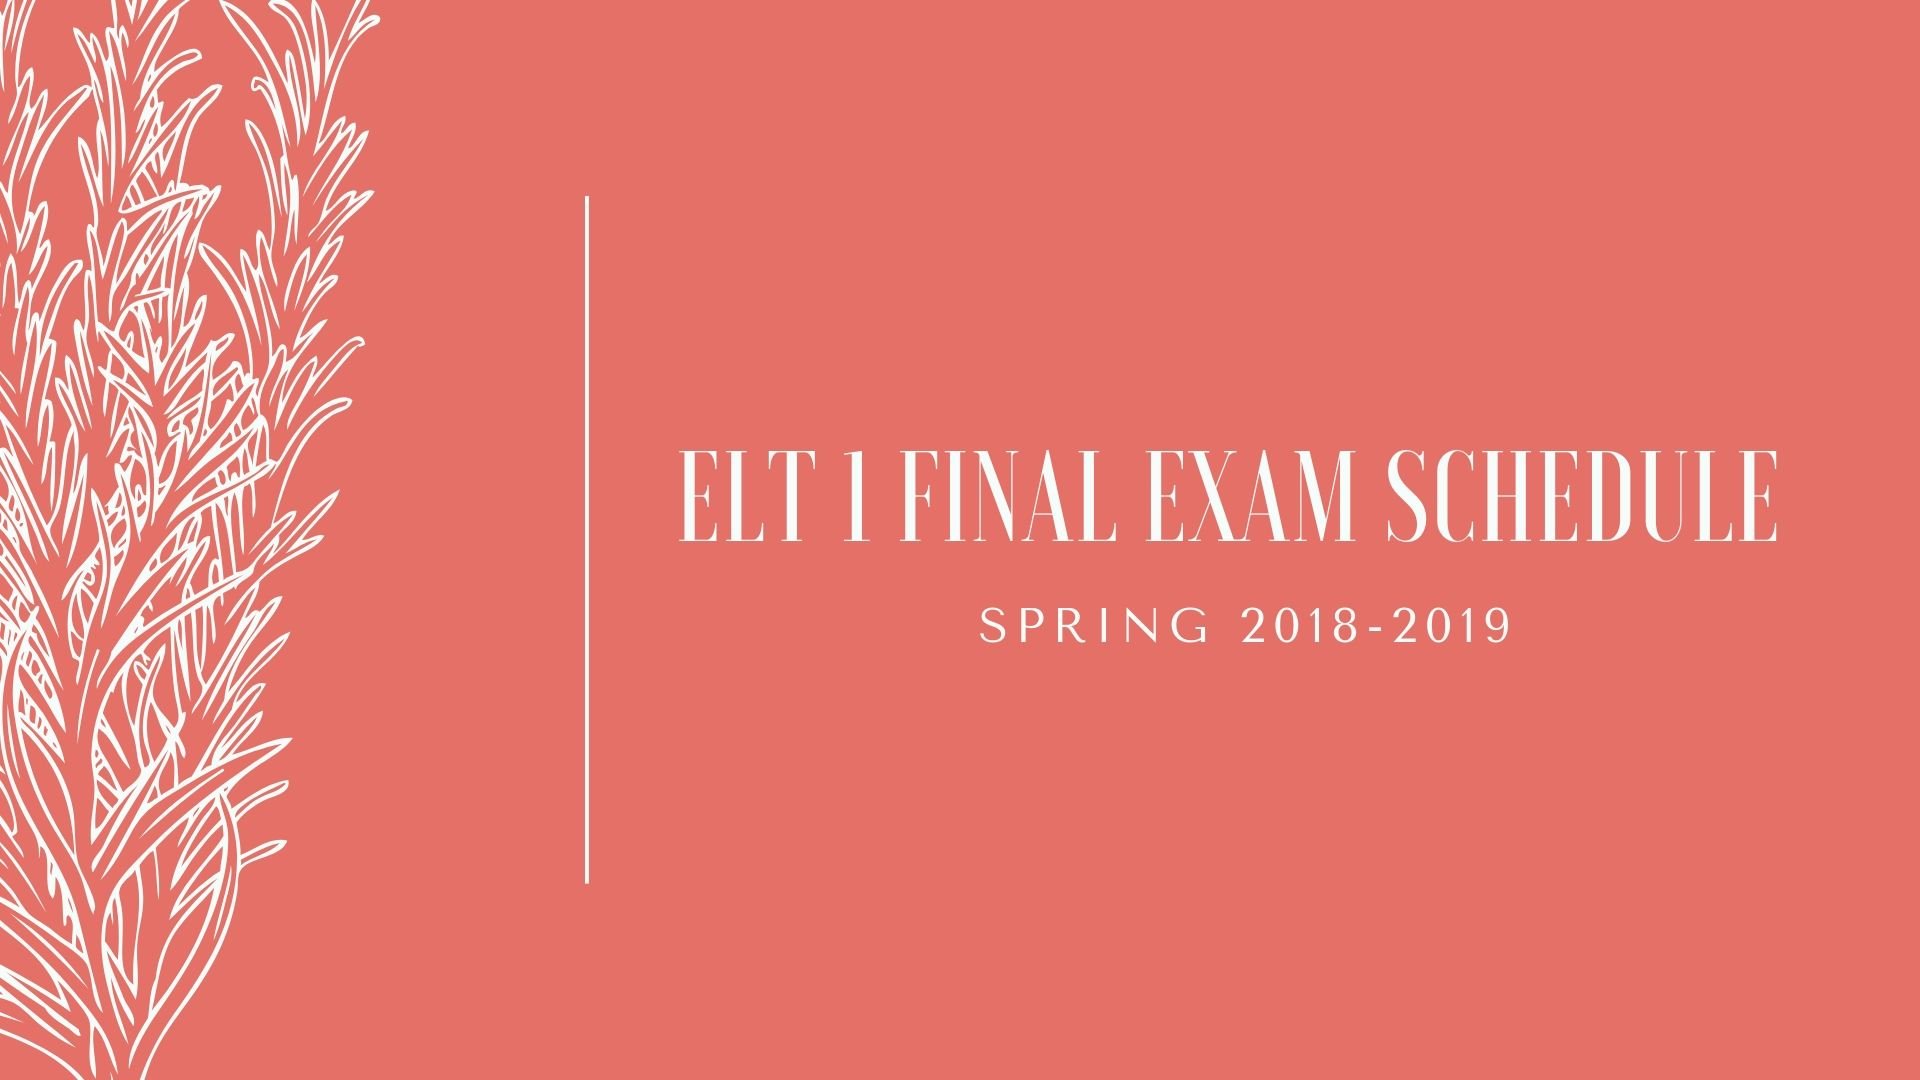 ELT 1 Final Exam Schedule, Spring Semester 20182019 TIU Tishk